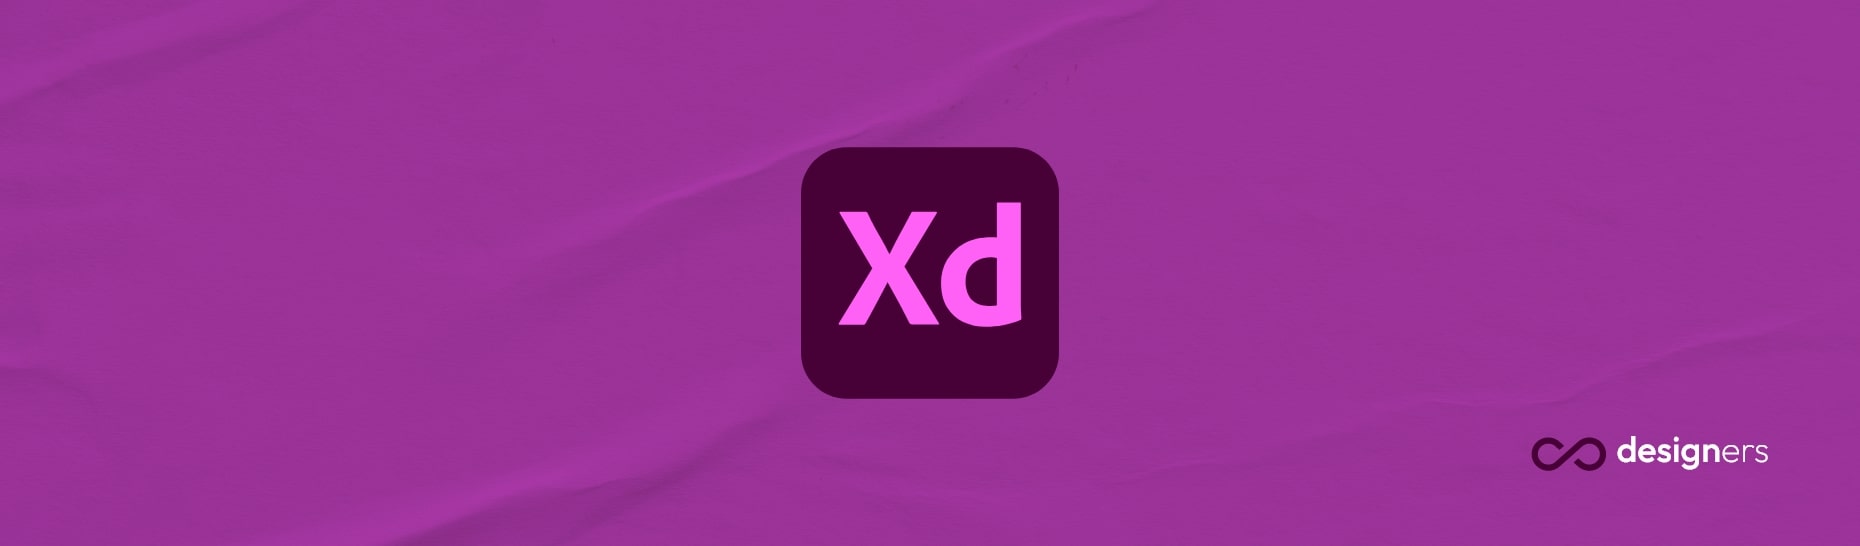 Who uses Adobe XD?